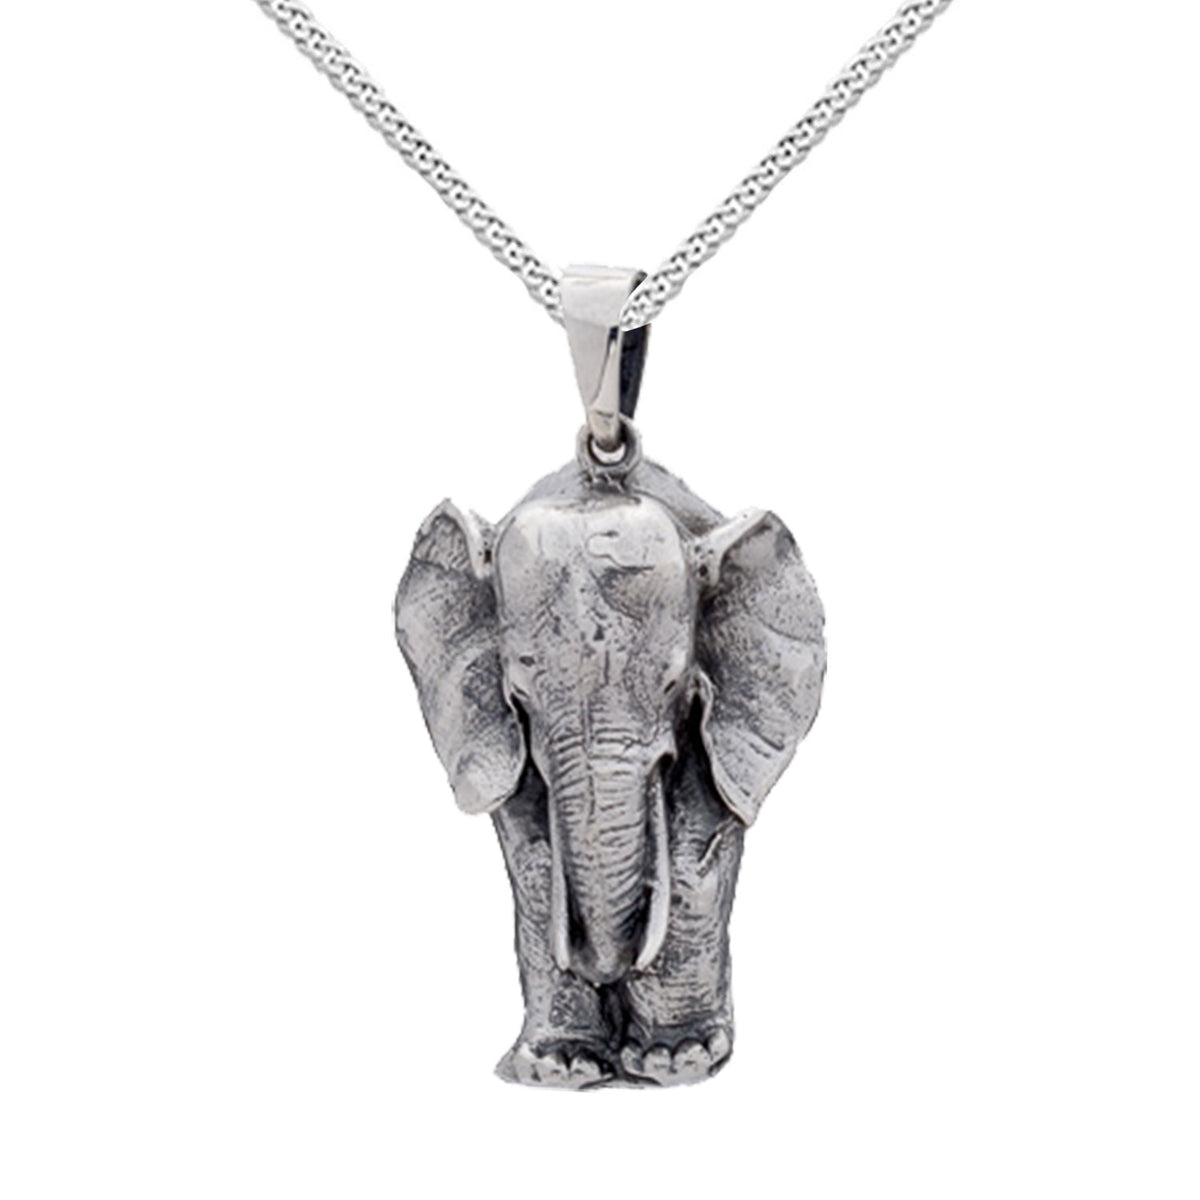 NEW: Large Standing Elephant Pendant Necklace